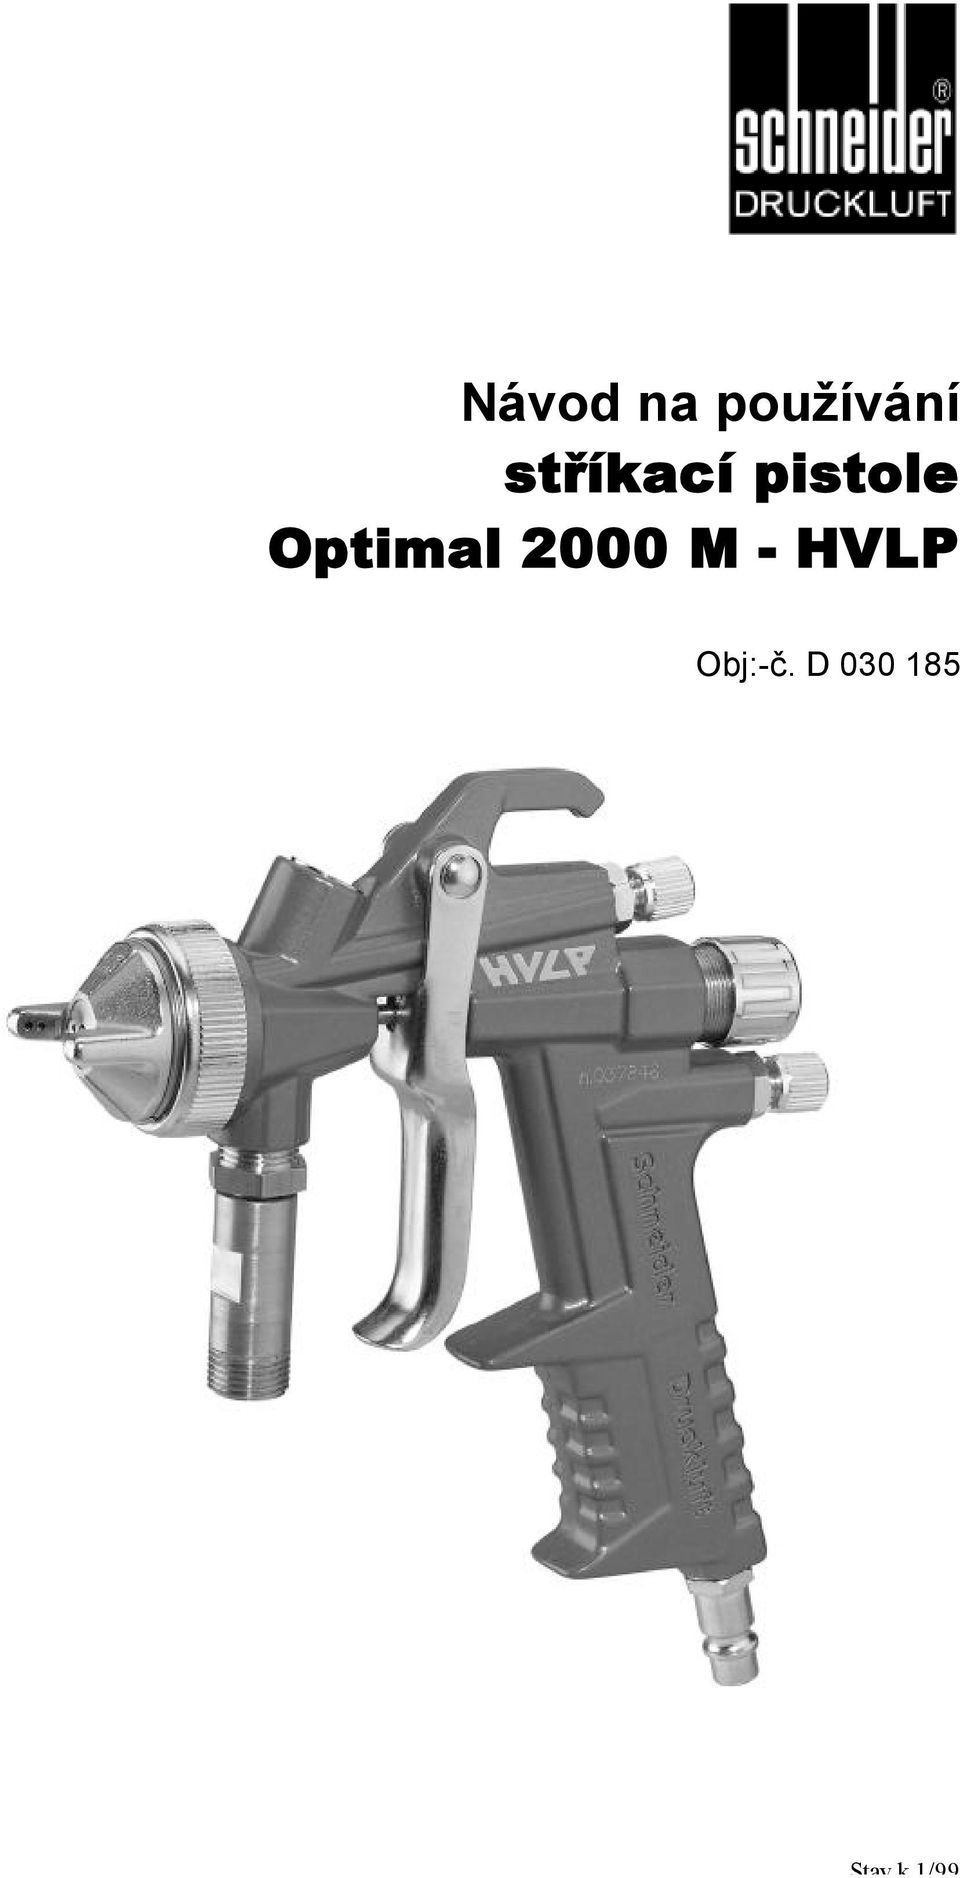 Optimal 2000 M - HVLP